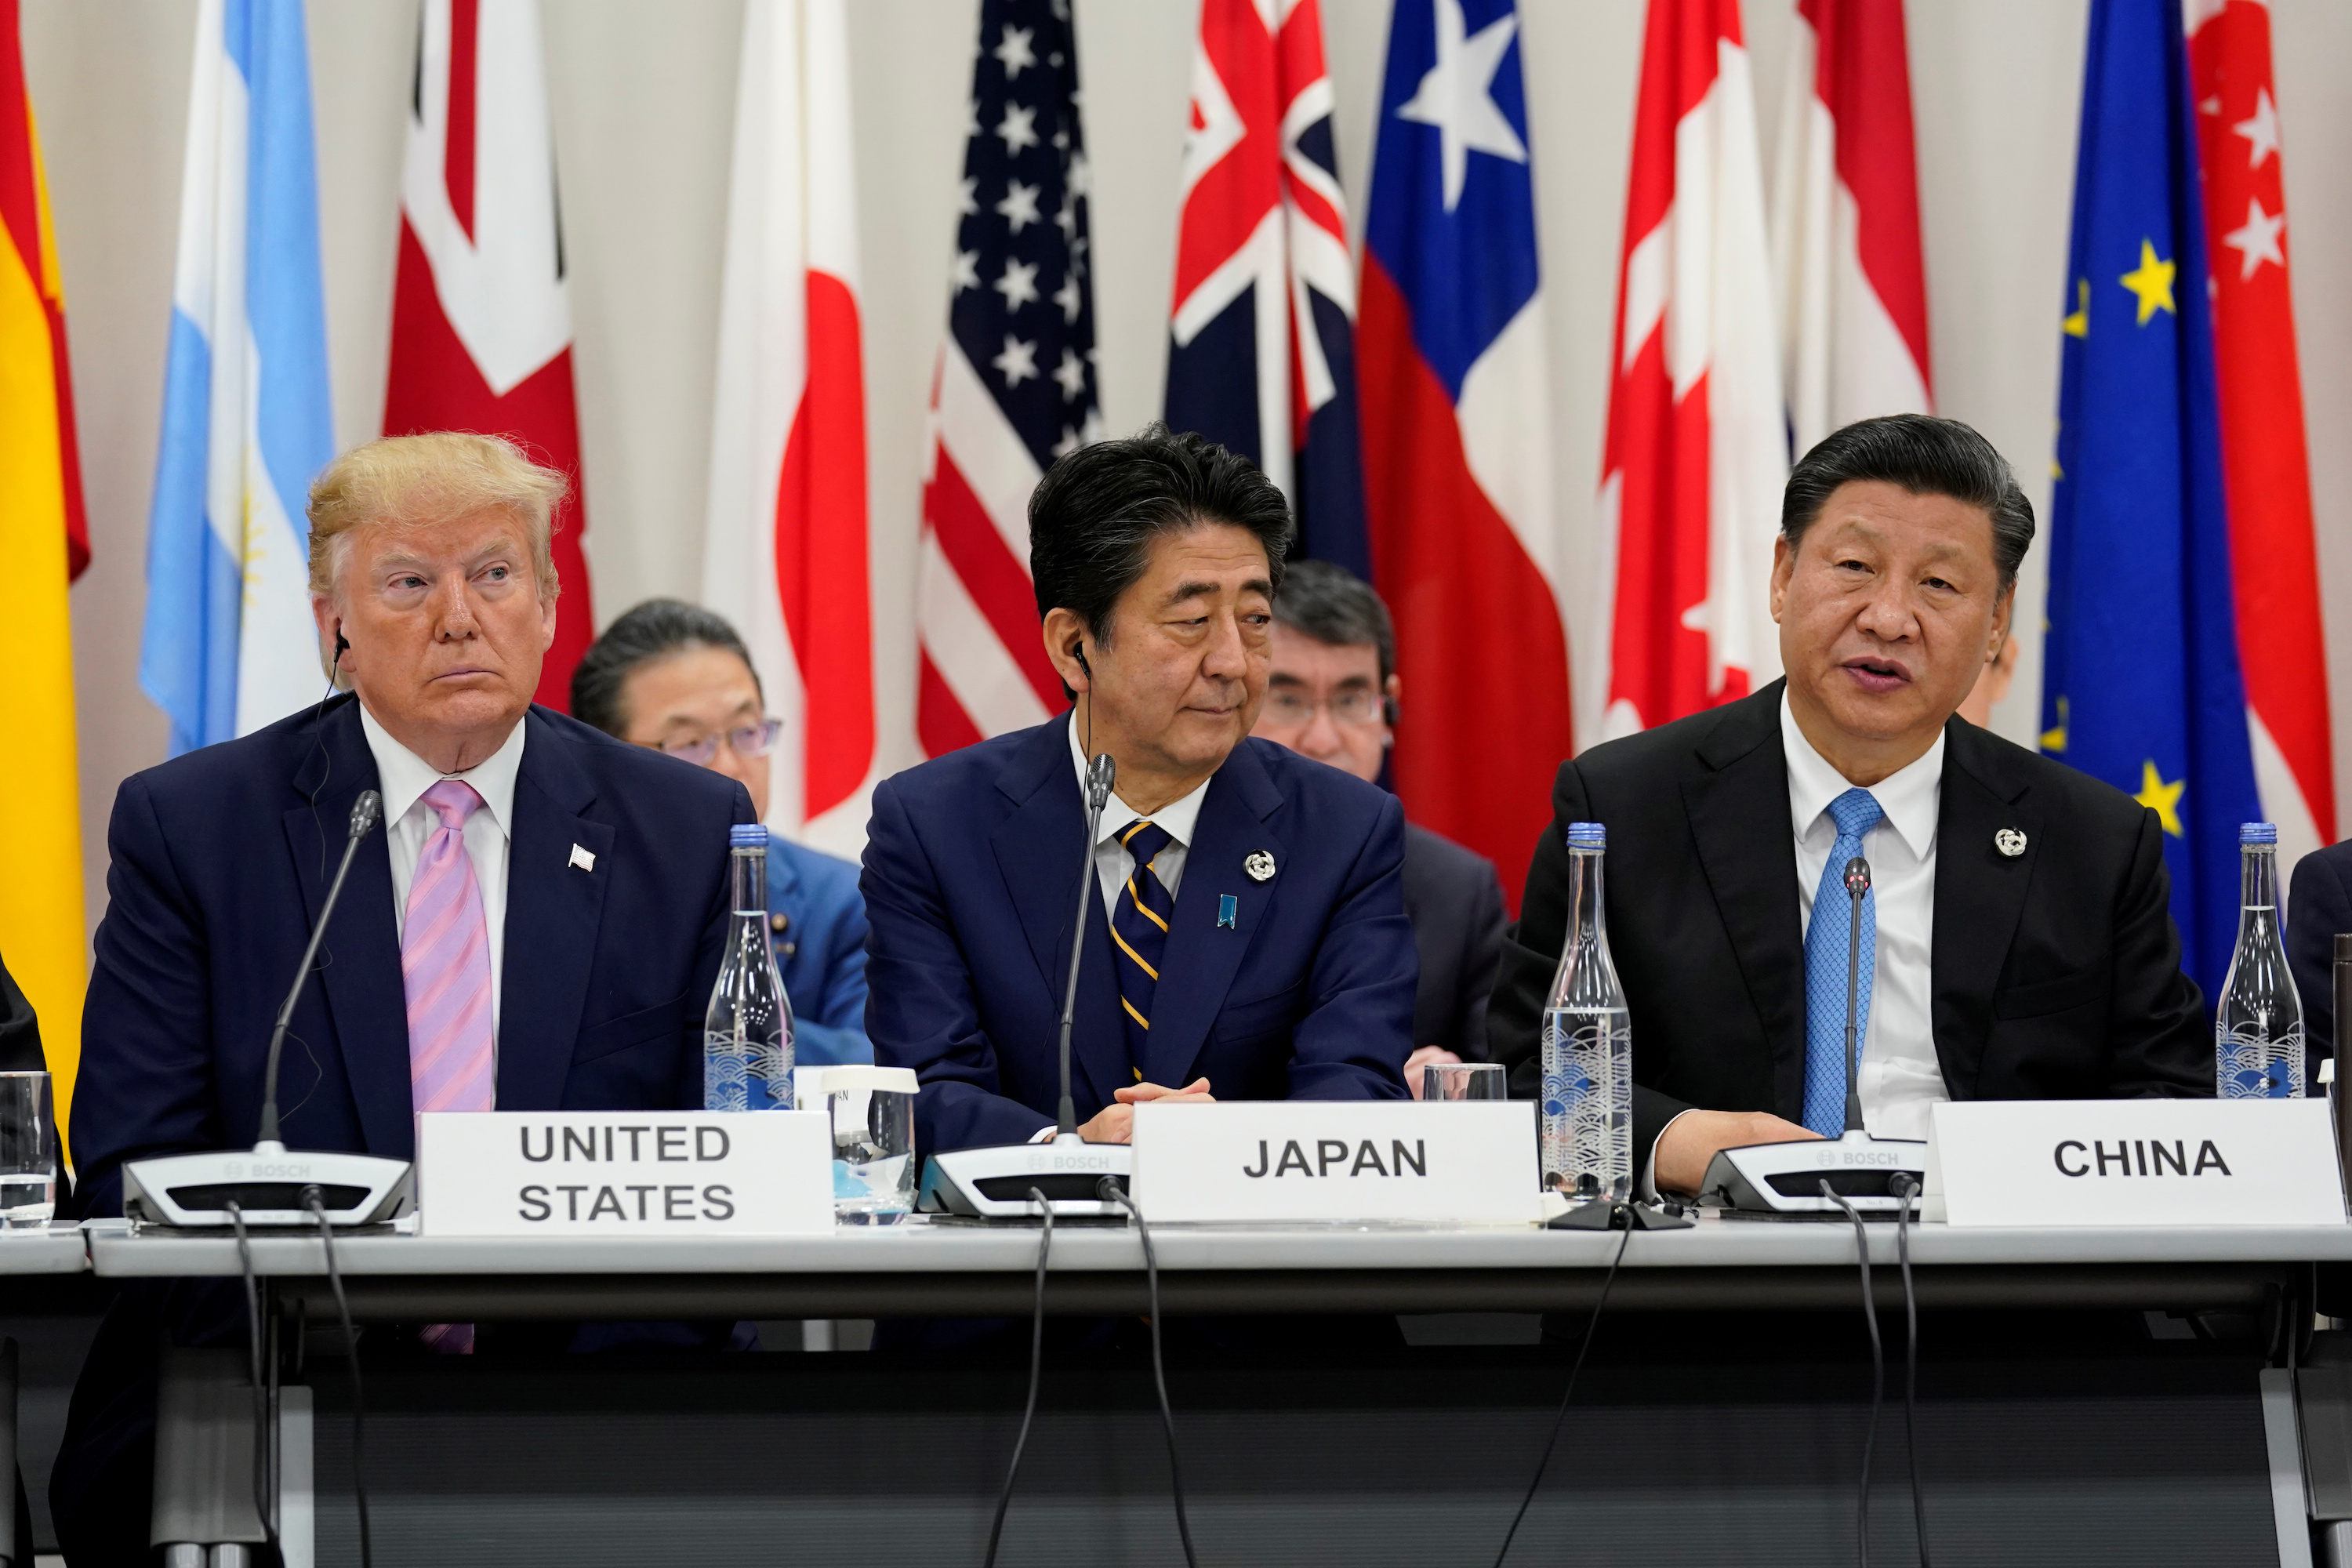 G20 leaders summit in Osaka